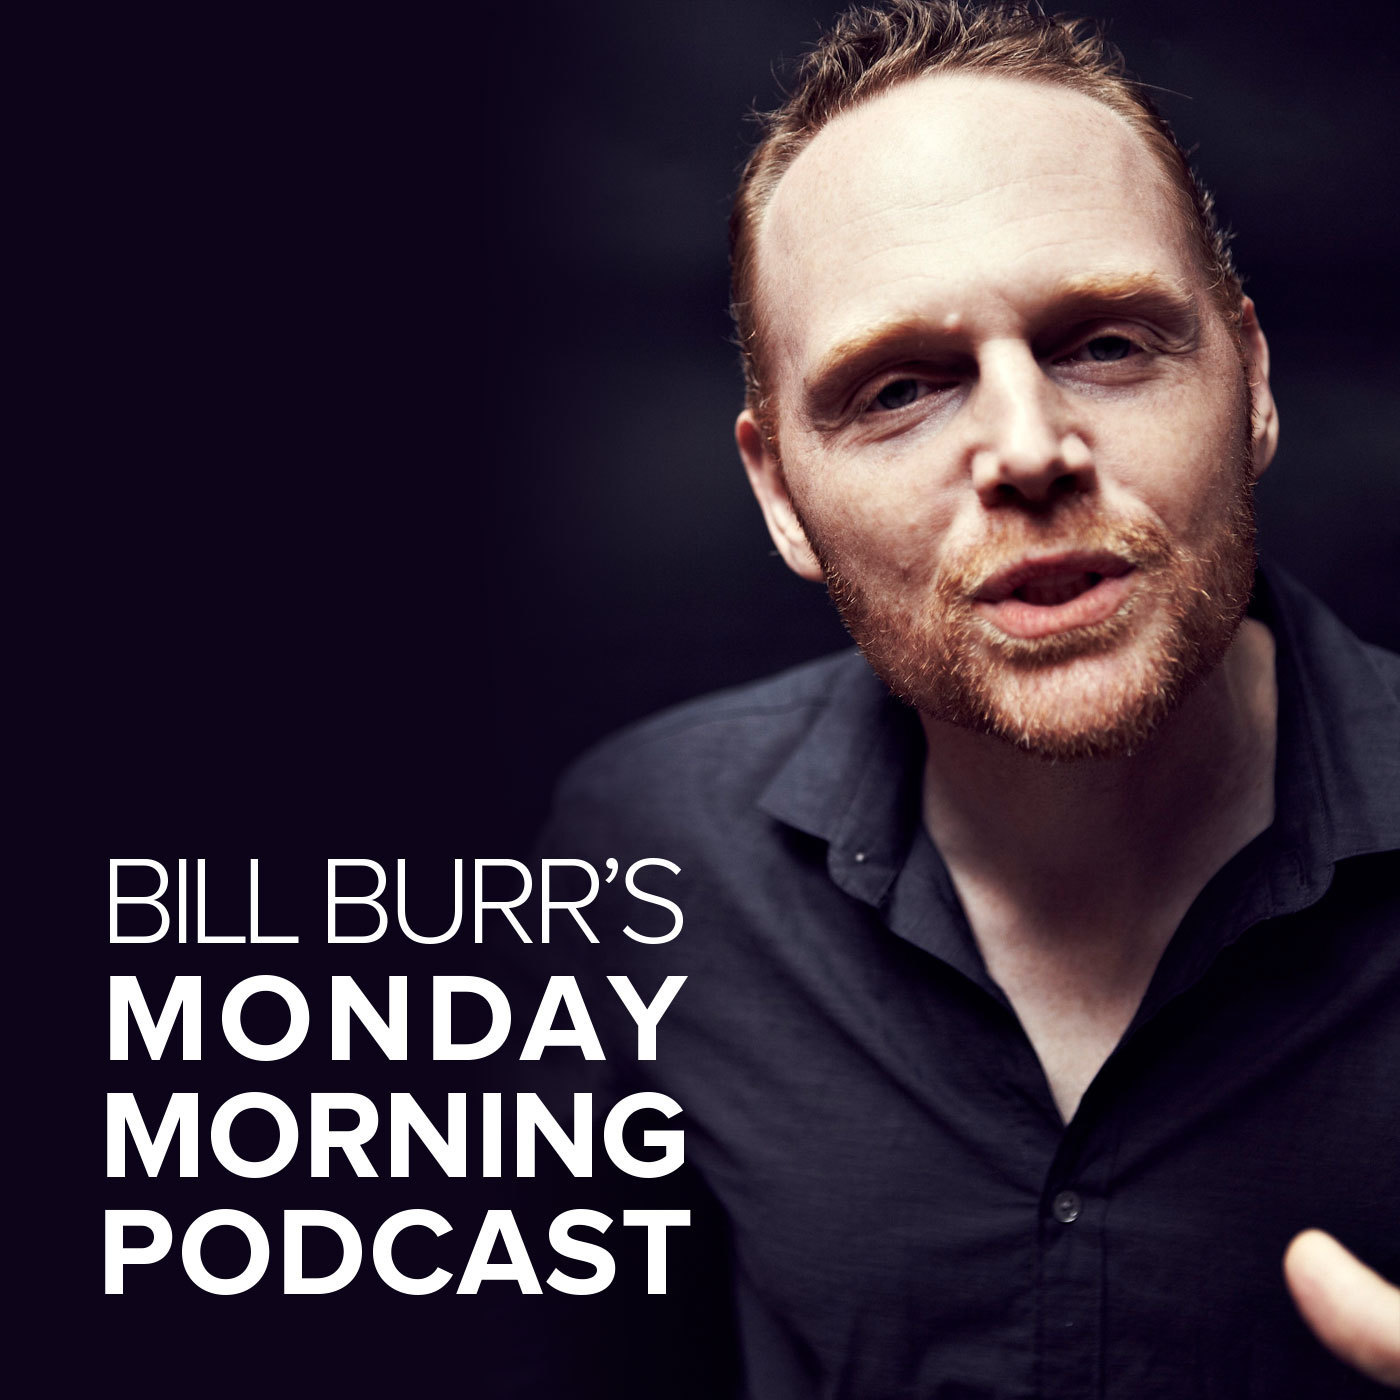 Monday Morning Podcast 4-11-16